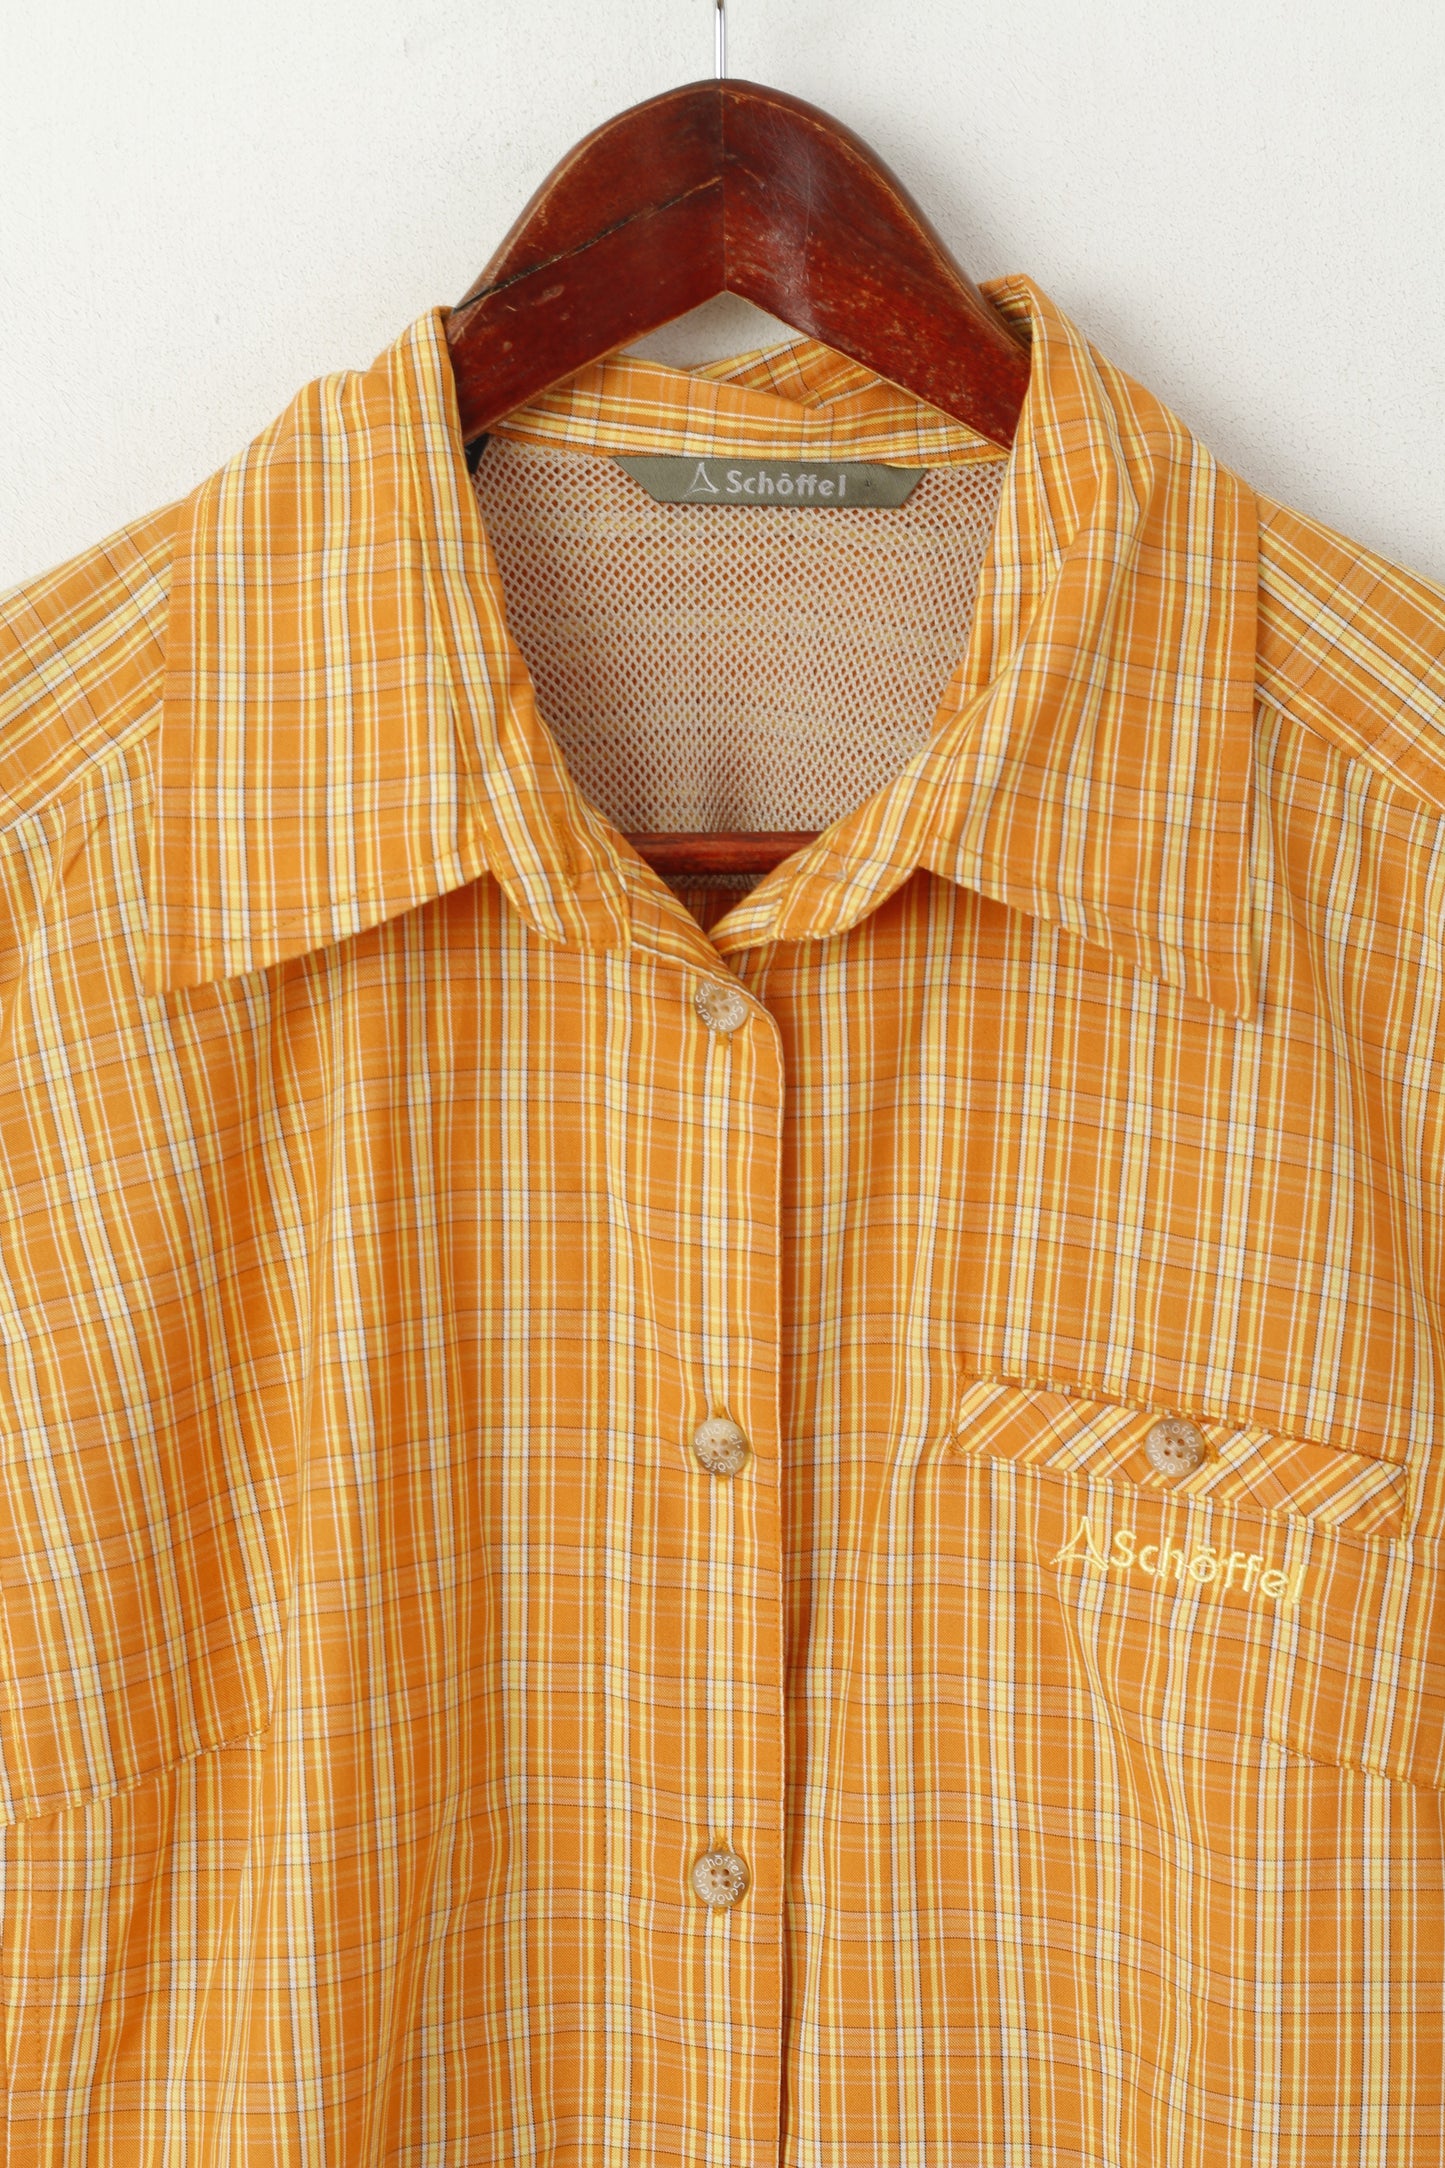 Schoffel Women 42 L Casual Shirt Orange Checkered Outdoor Vintage Mountain Top